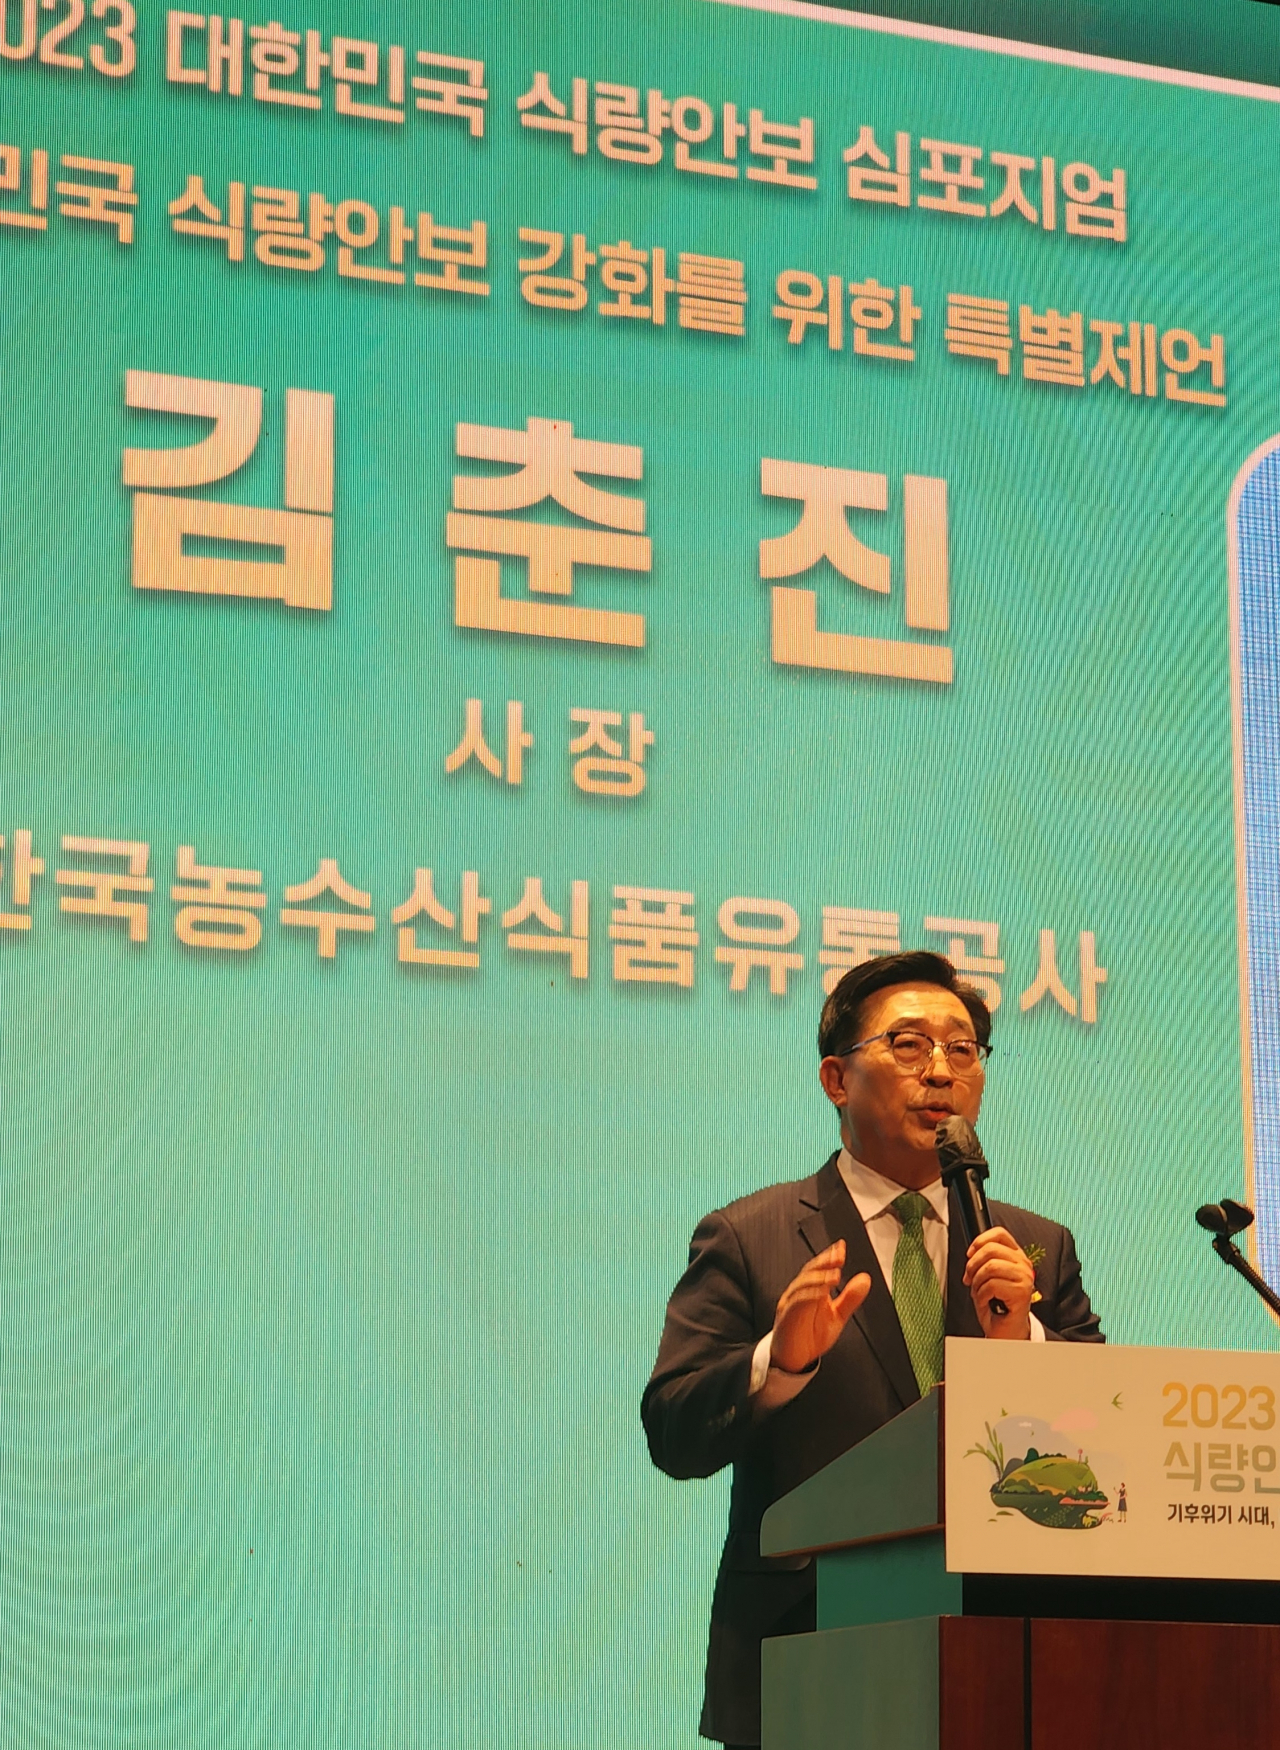 Kim Chun-jin, CEO of the Korea Agro-Fisheries & Food Trade Corp, speaks at the the 2023 Korea Food Security Symposium, on Friday. (Korea Agro-Fisheries & Food Trade Corp.)